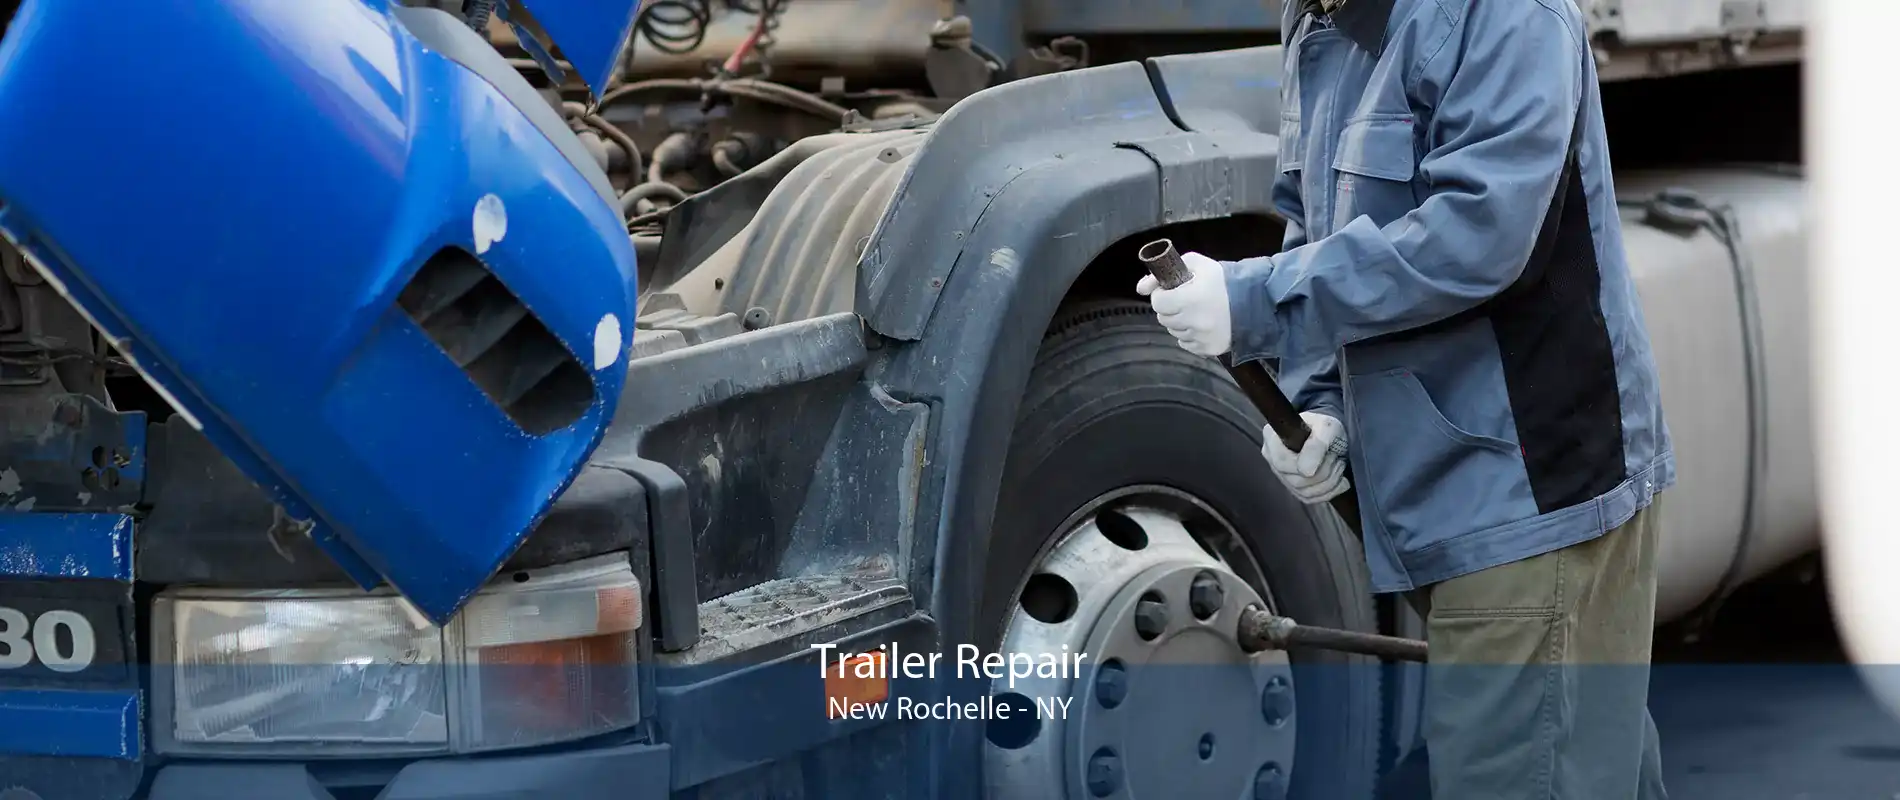 Trailer Repair New Rochelle - NY